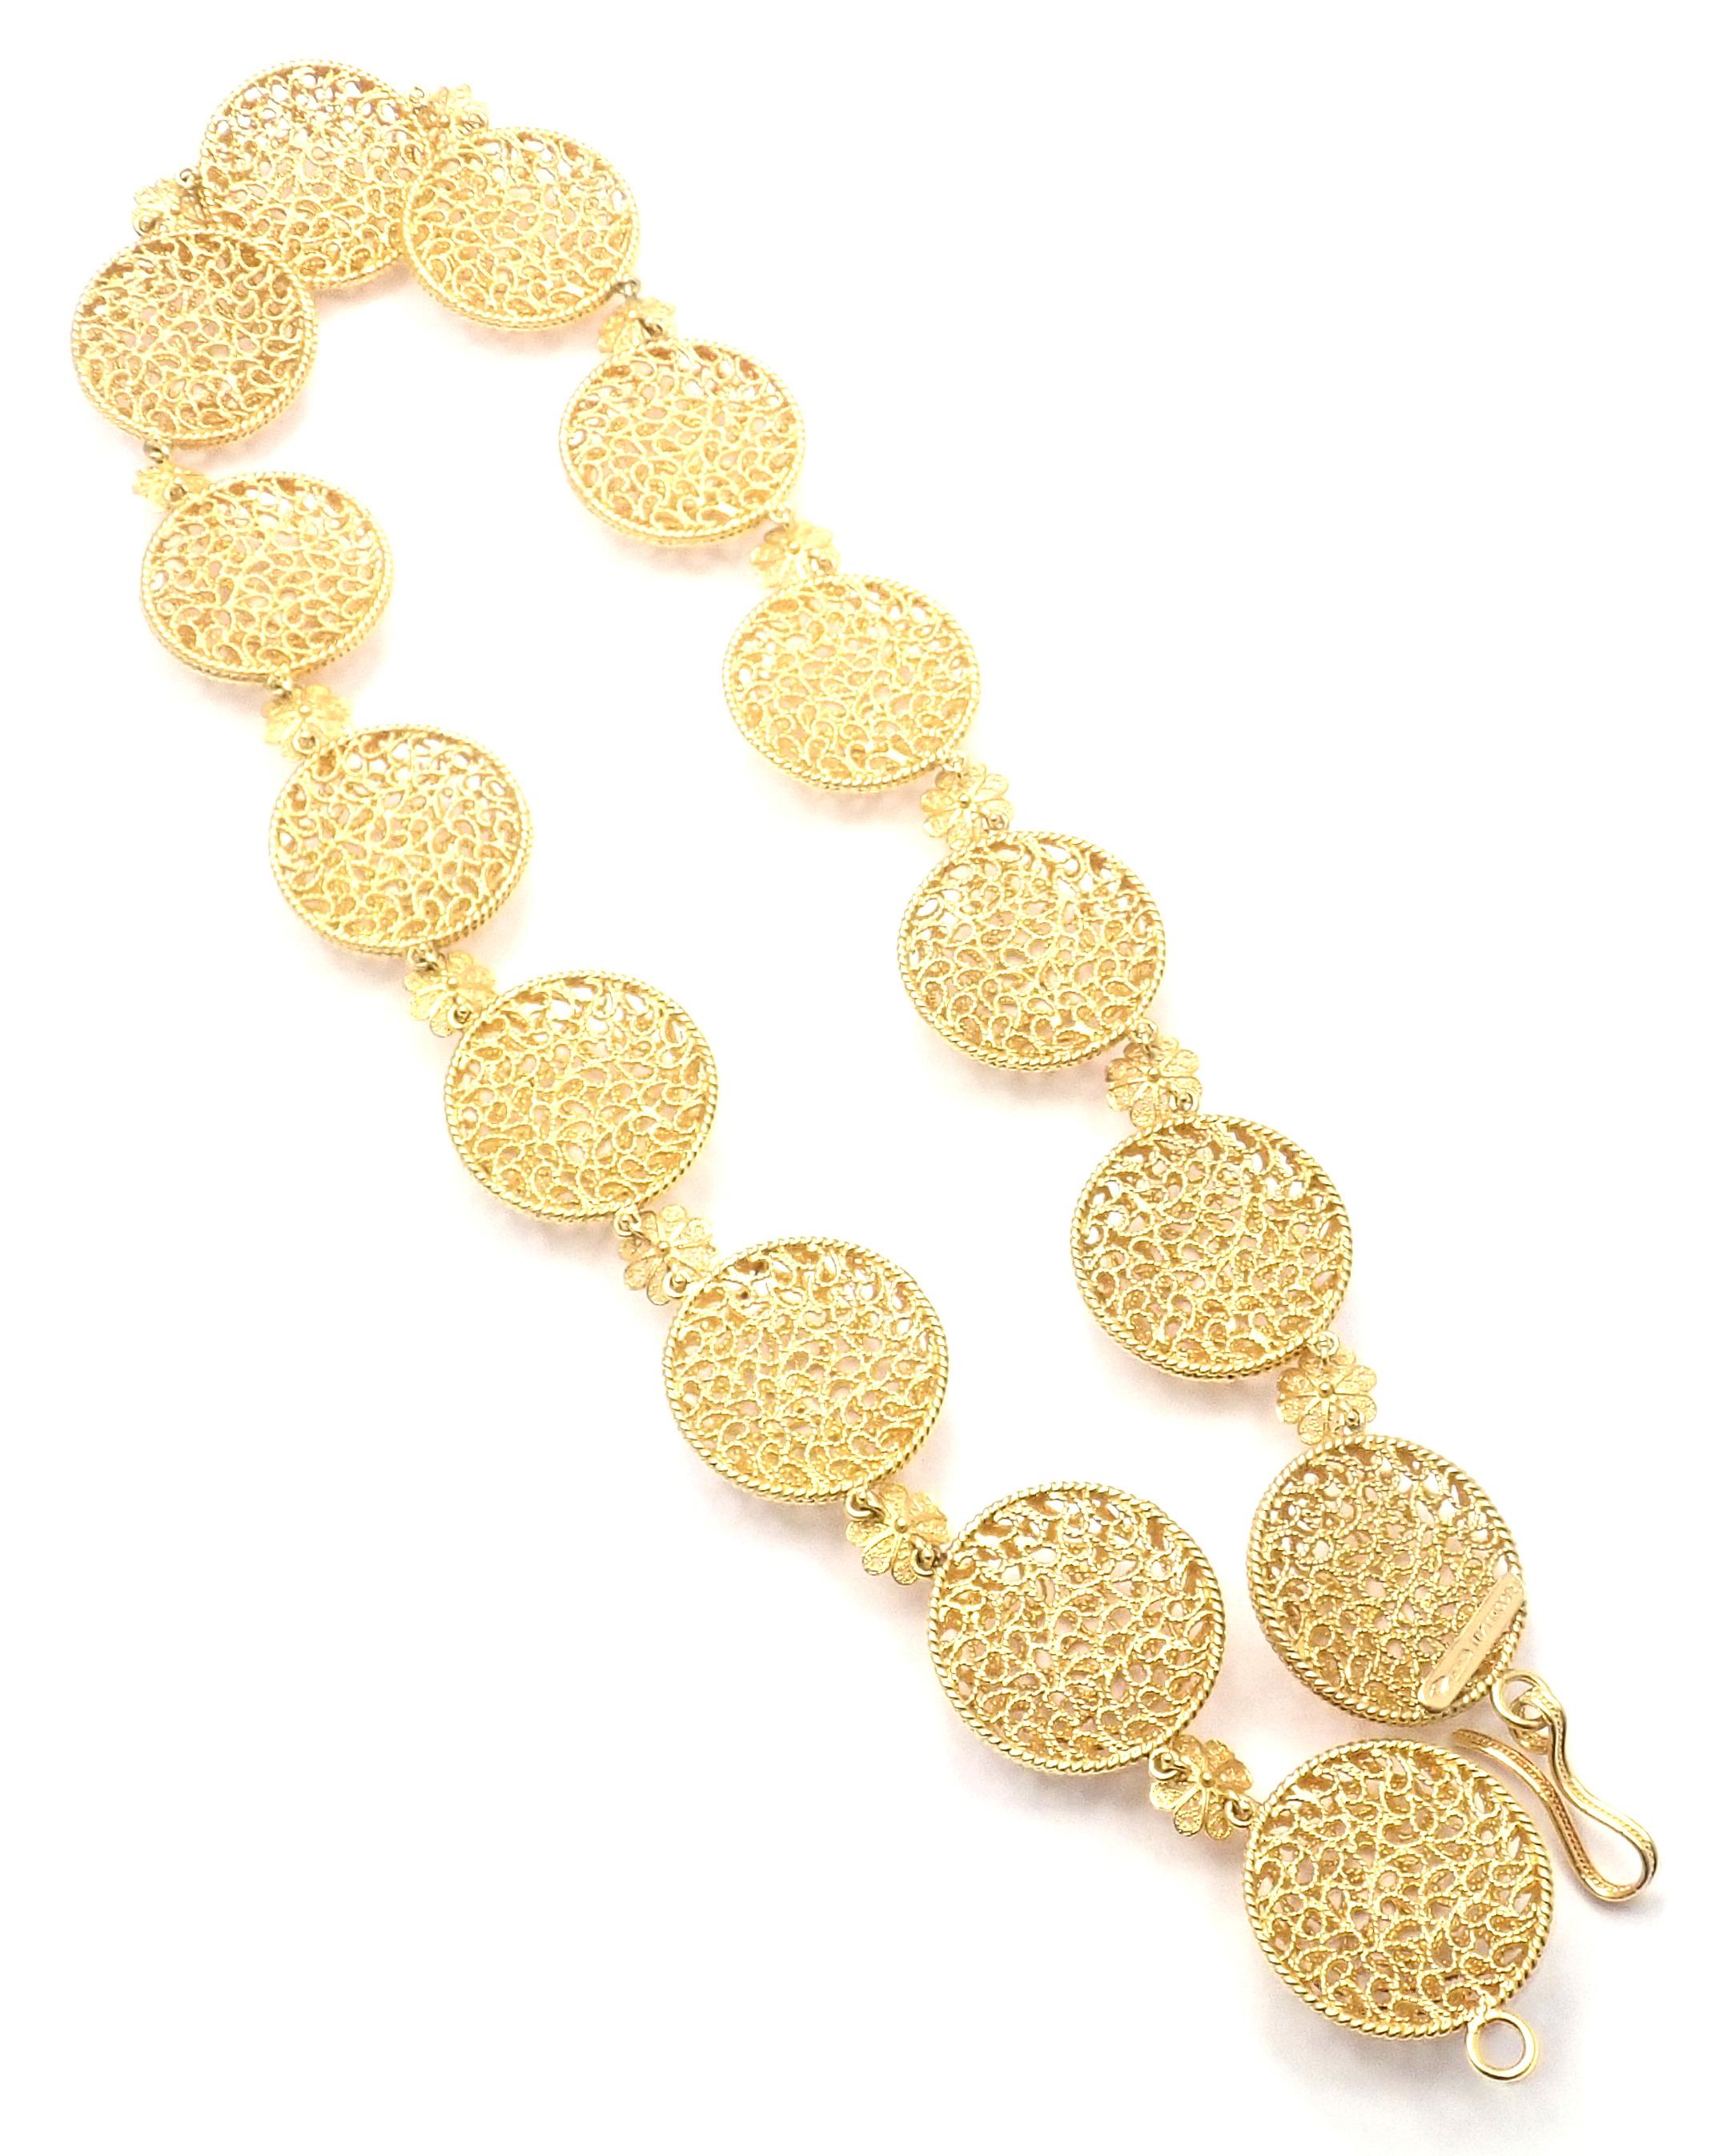 Women's or Men's Buccellati Filidoro Yellow Gold Link Necklace